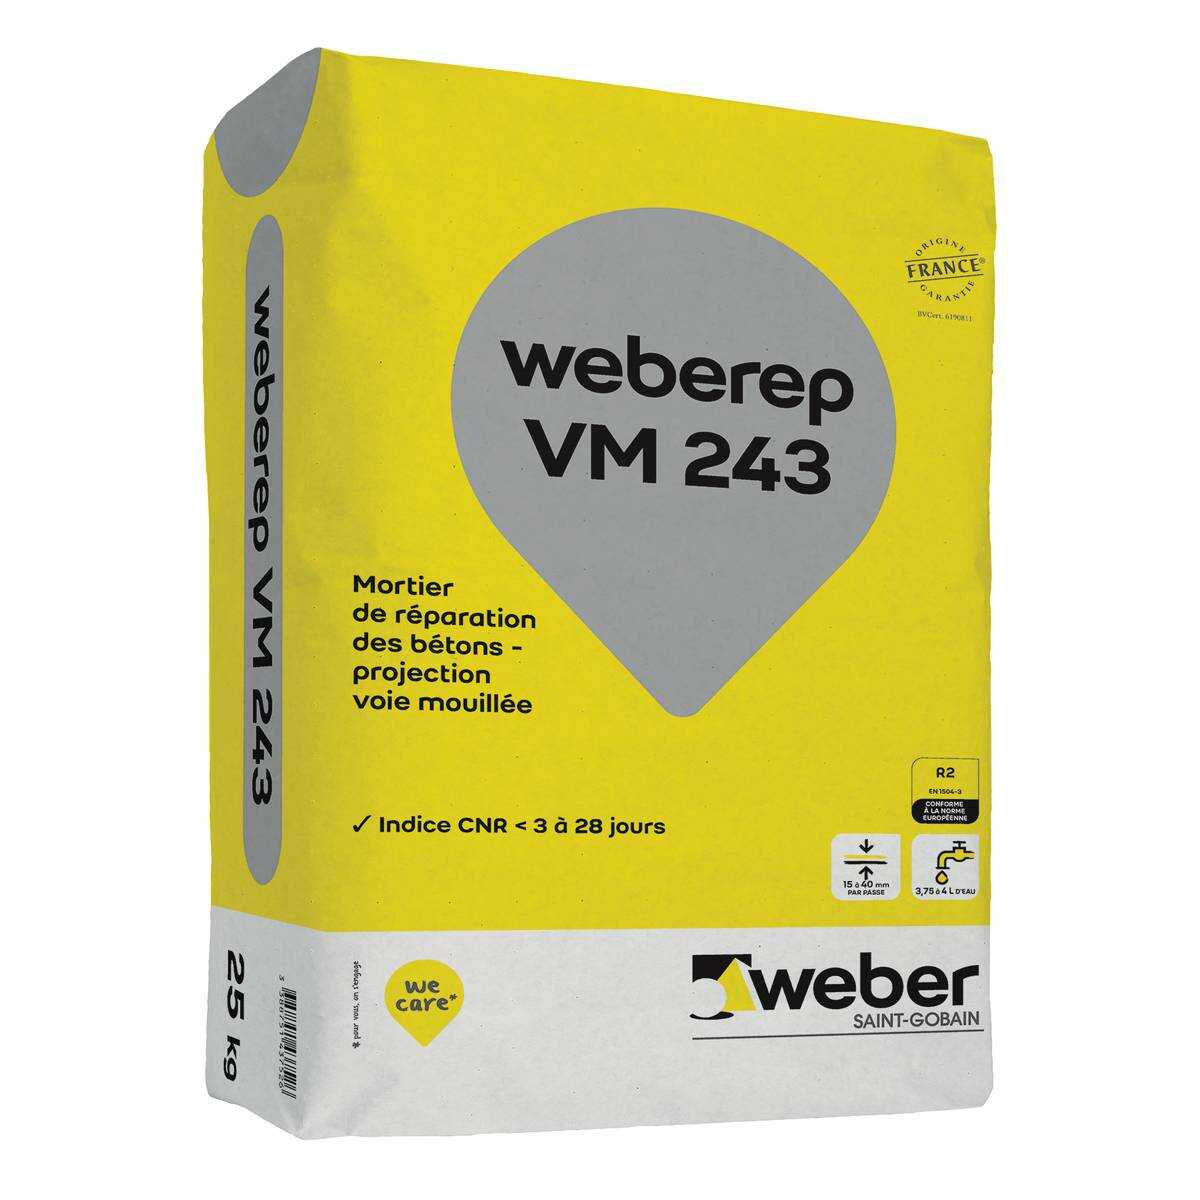 WEBEREP VM 243 FIBRE 25KG